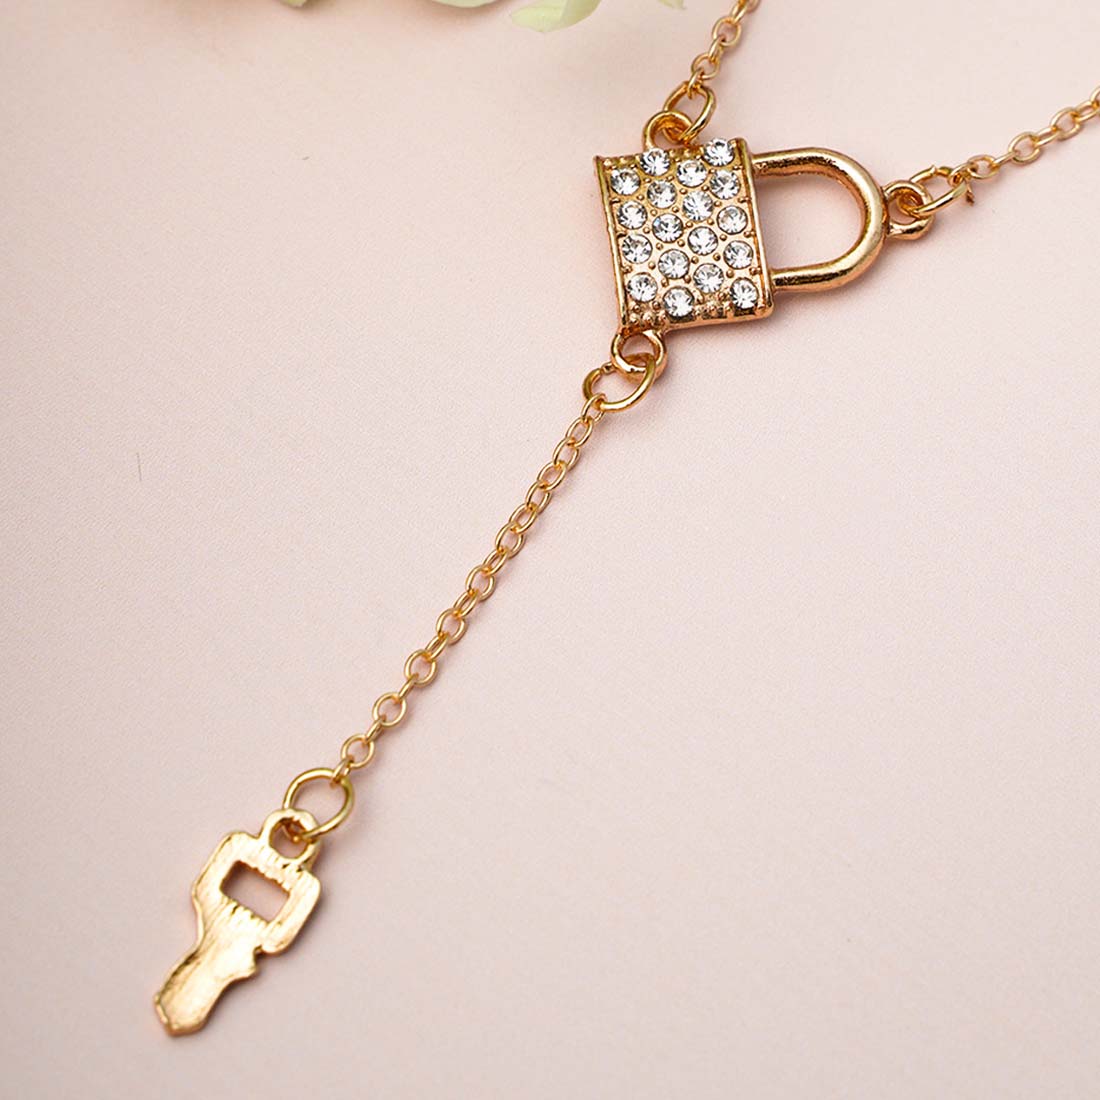 Gold-Toned & White Rhinestone Lock & Key Chain Necklace